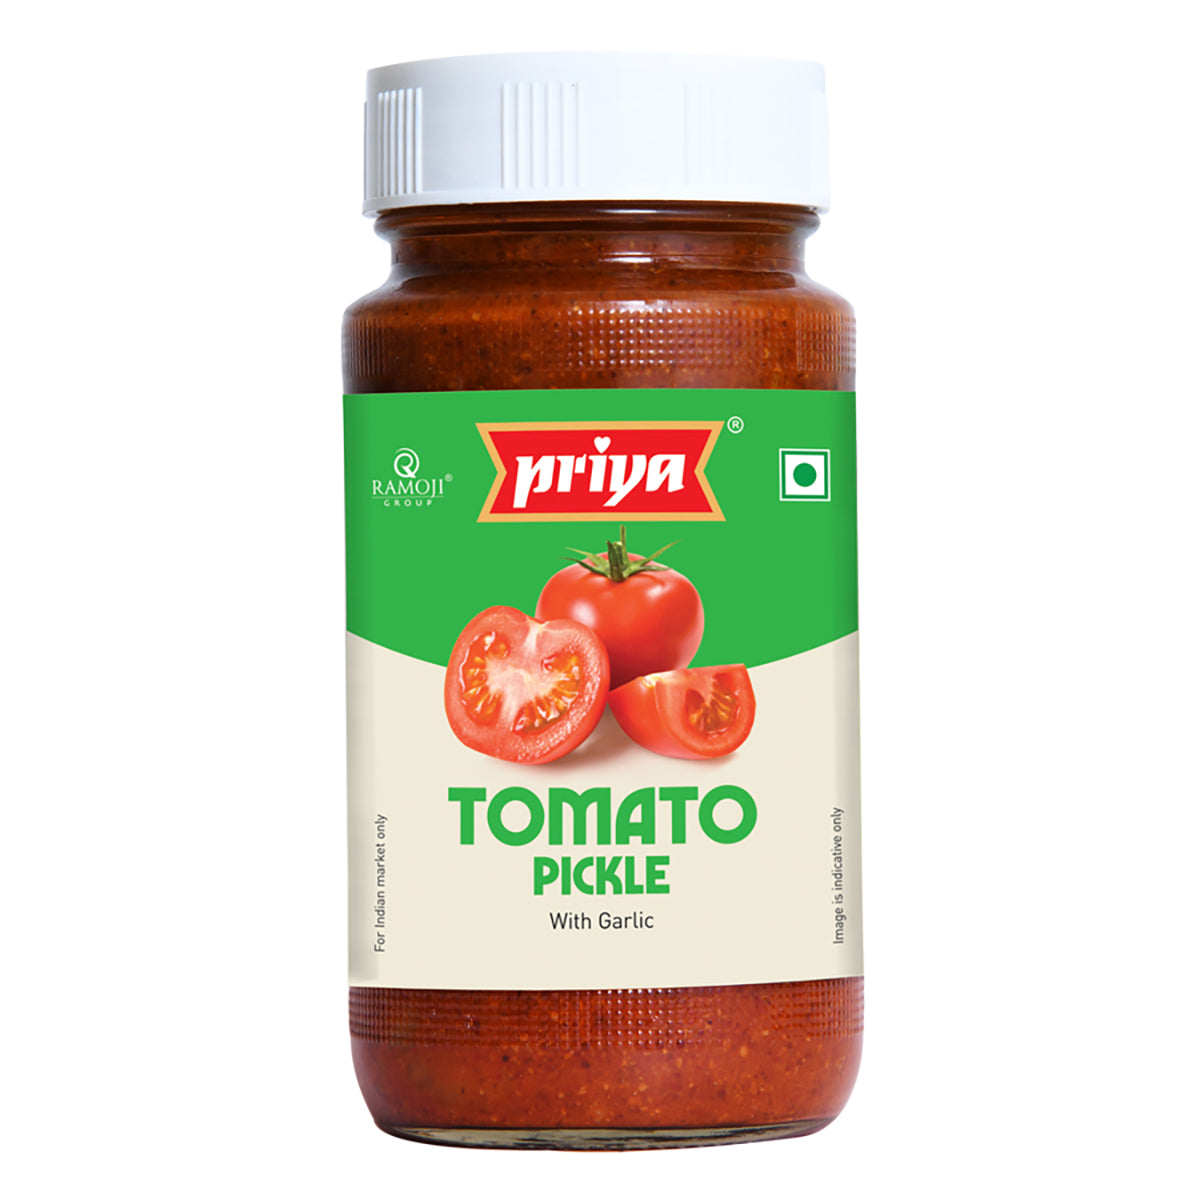 Buy tomato pickle online | priya tomato pickle with garlic ...